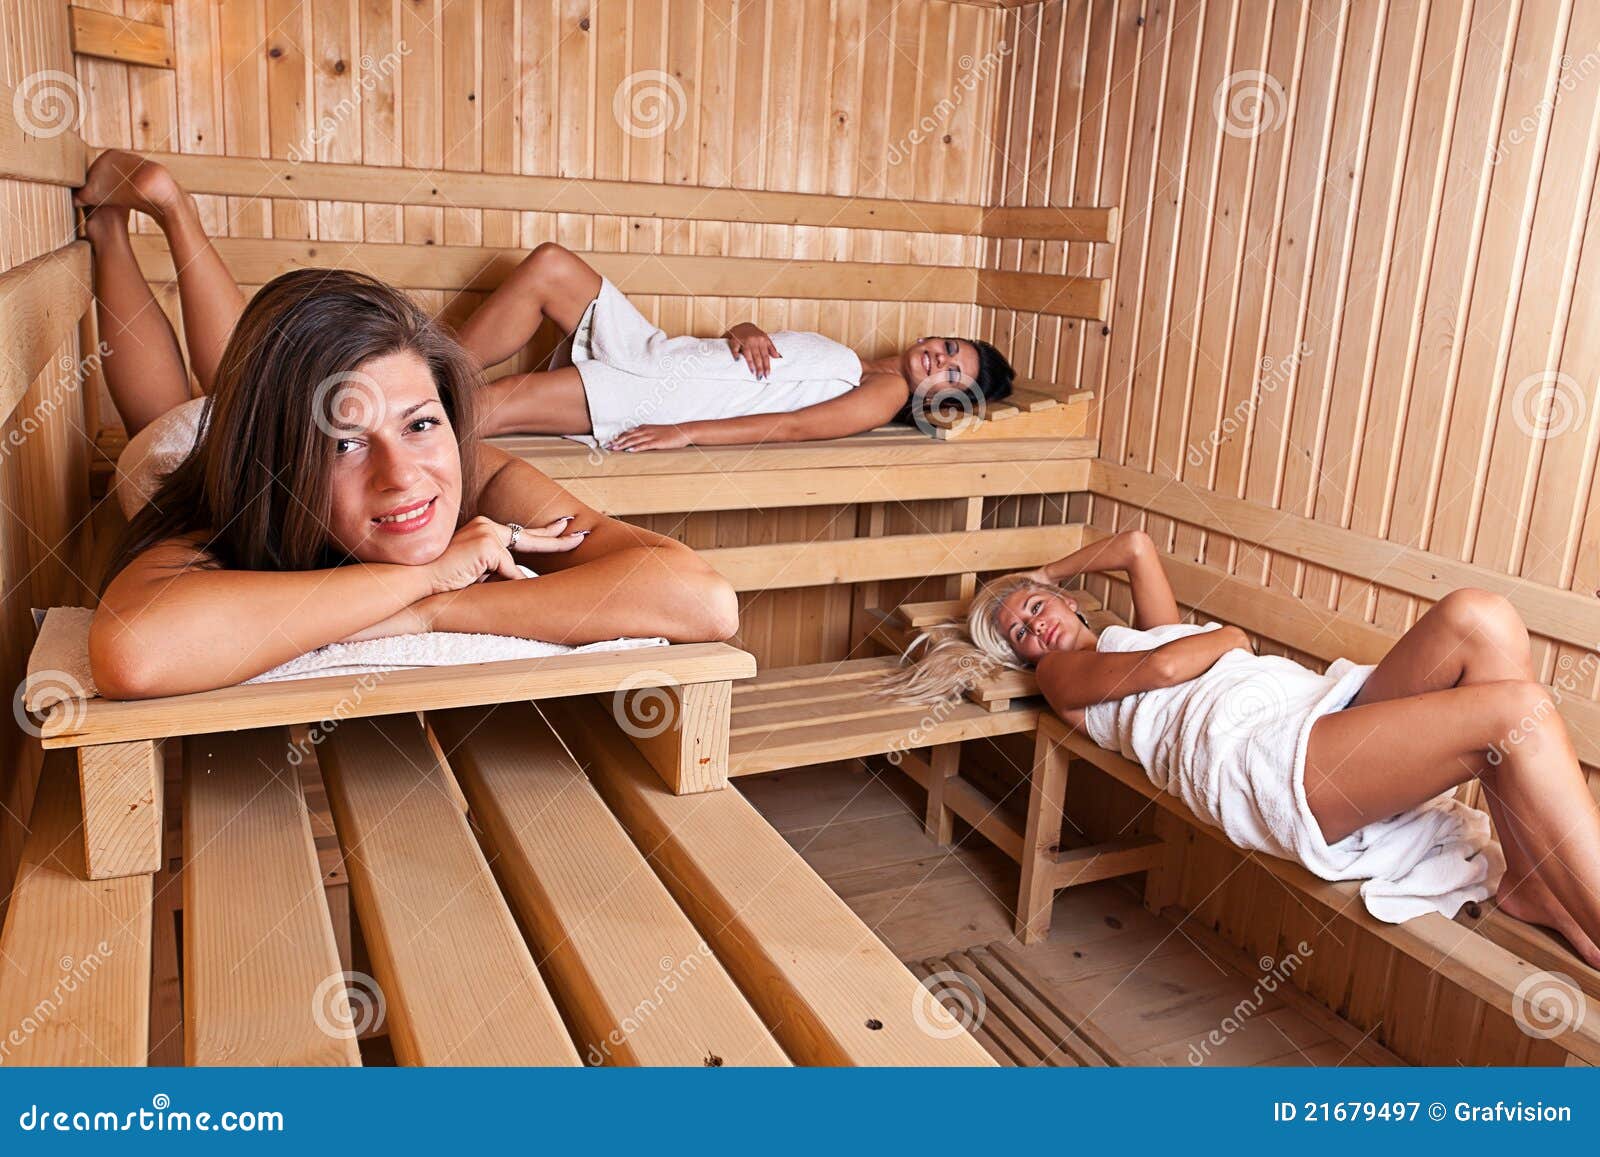 Frauen nackt sauna 